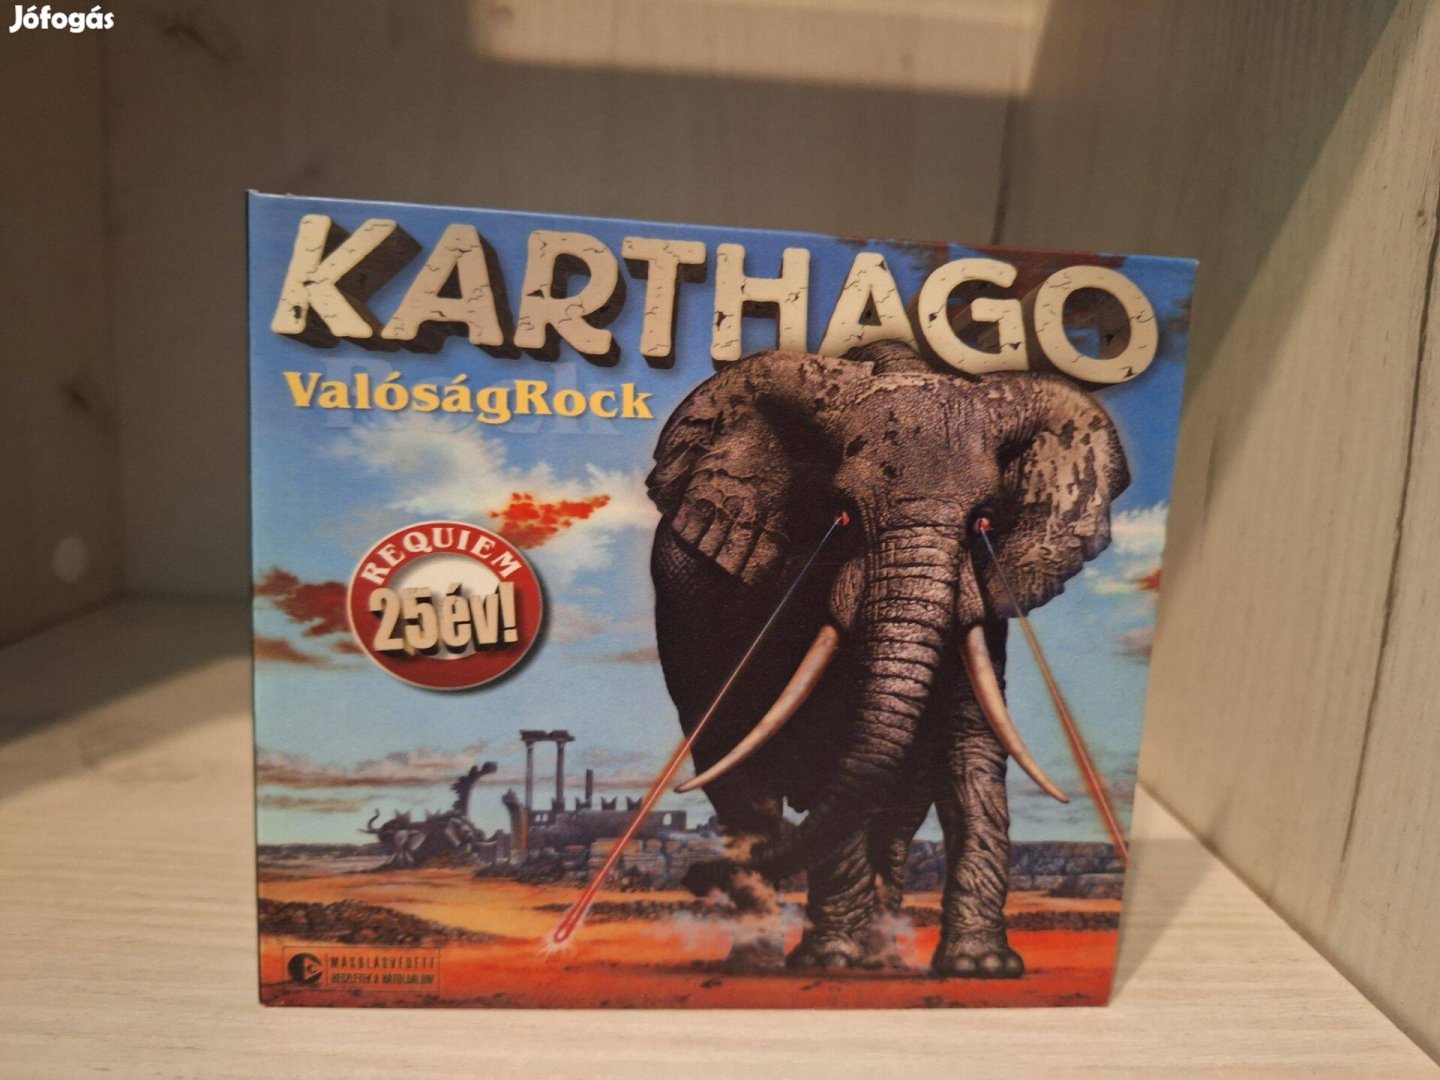 Karthago - Valóságrock CD